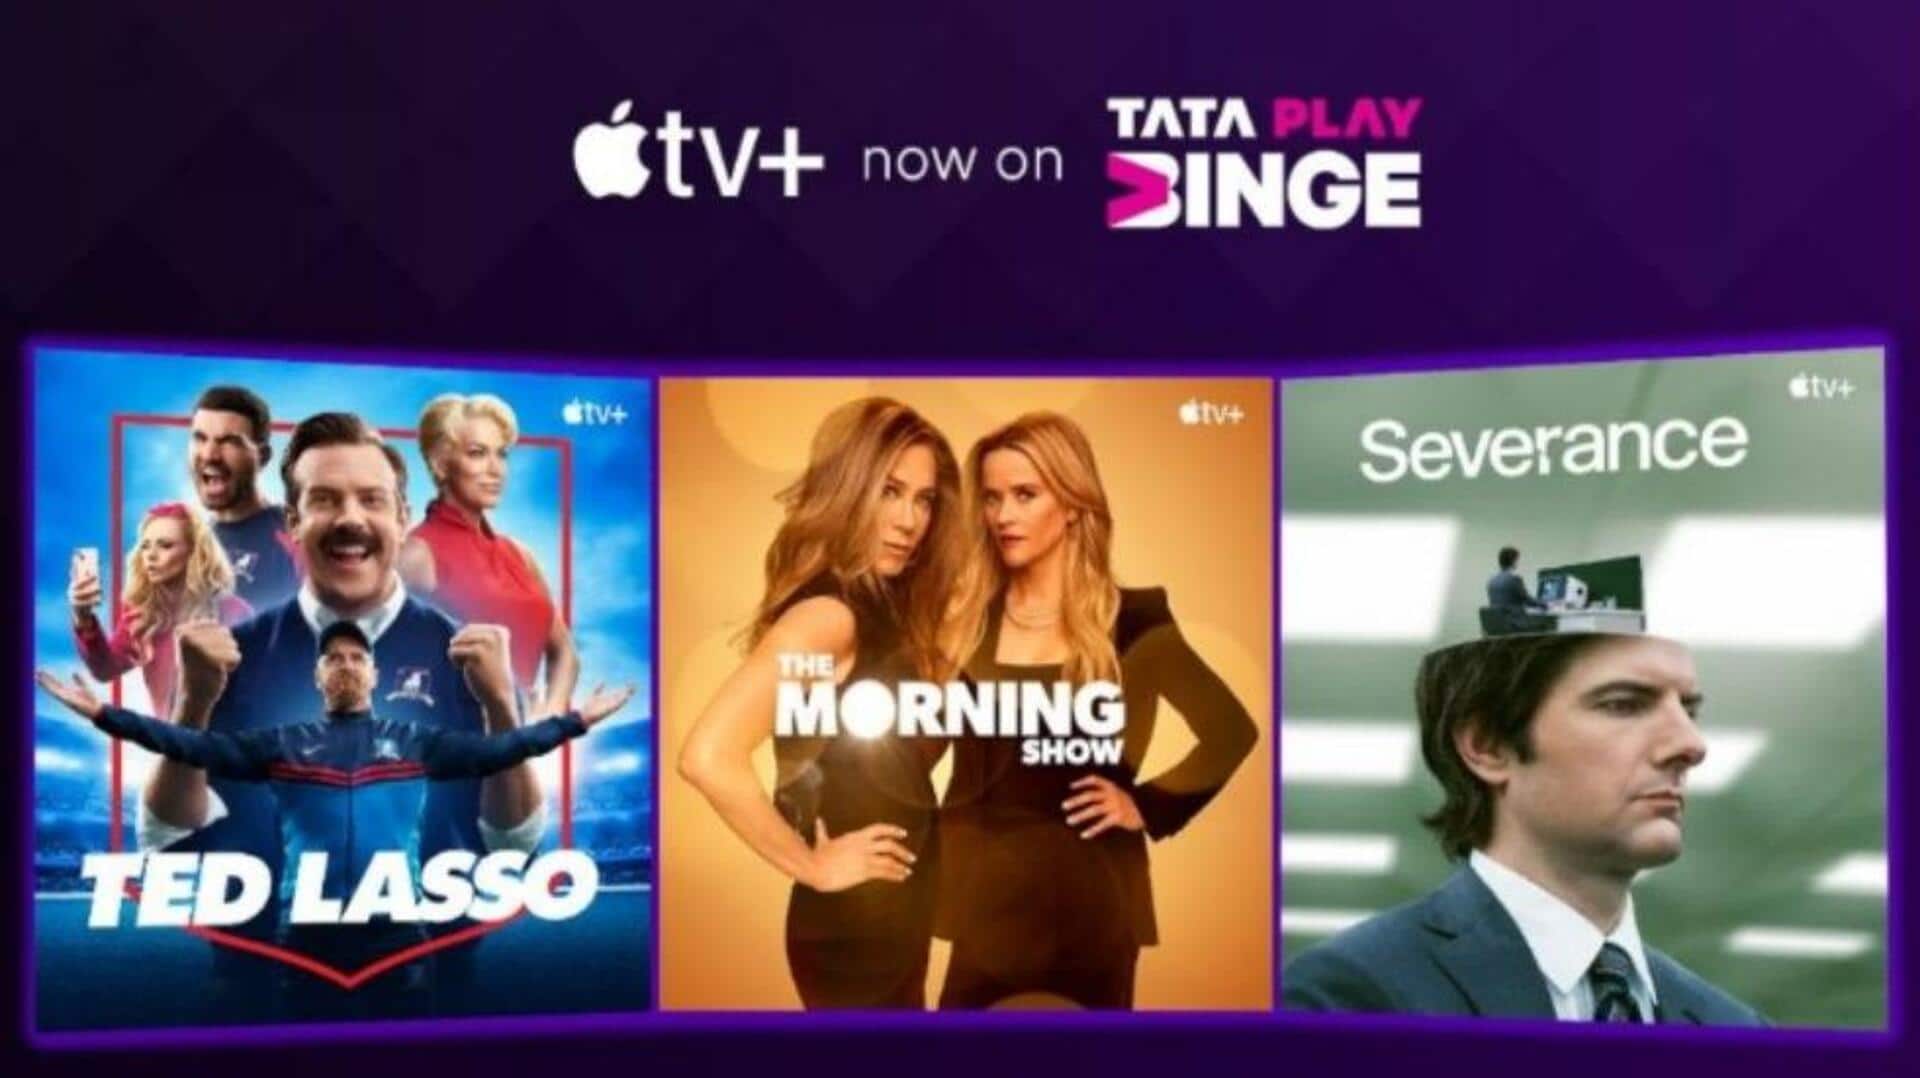 Saif-Kareena launch Apple TV+ in India via Tata Play Binge